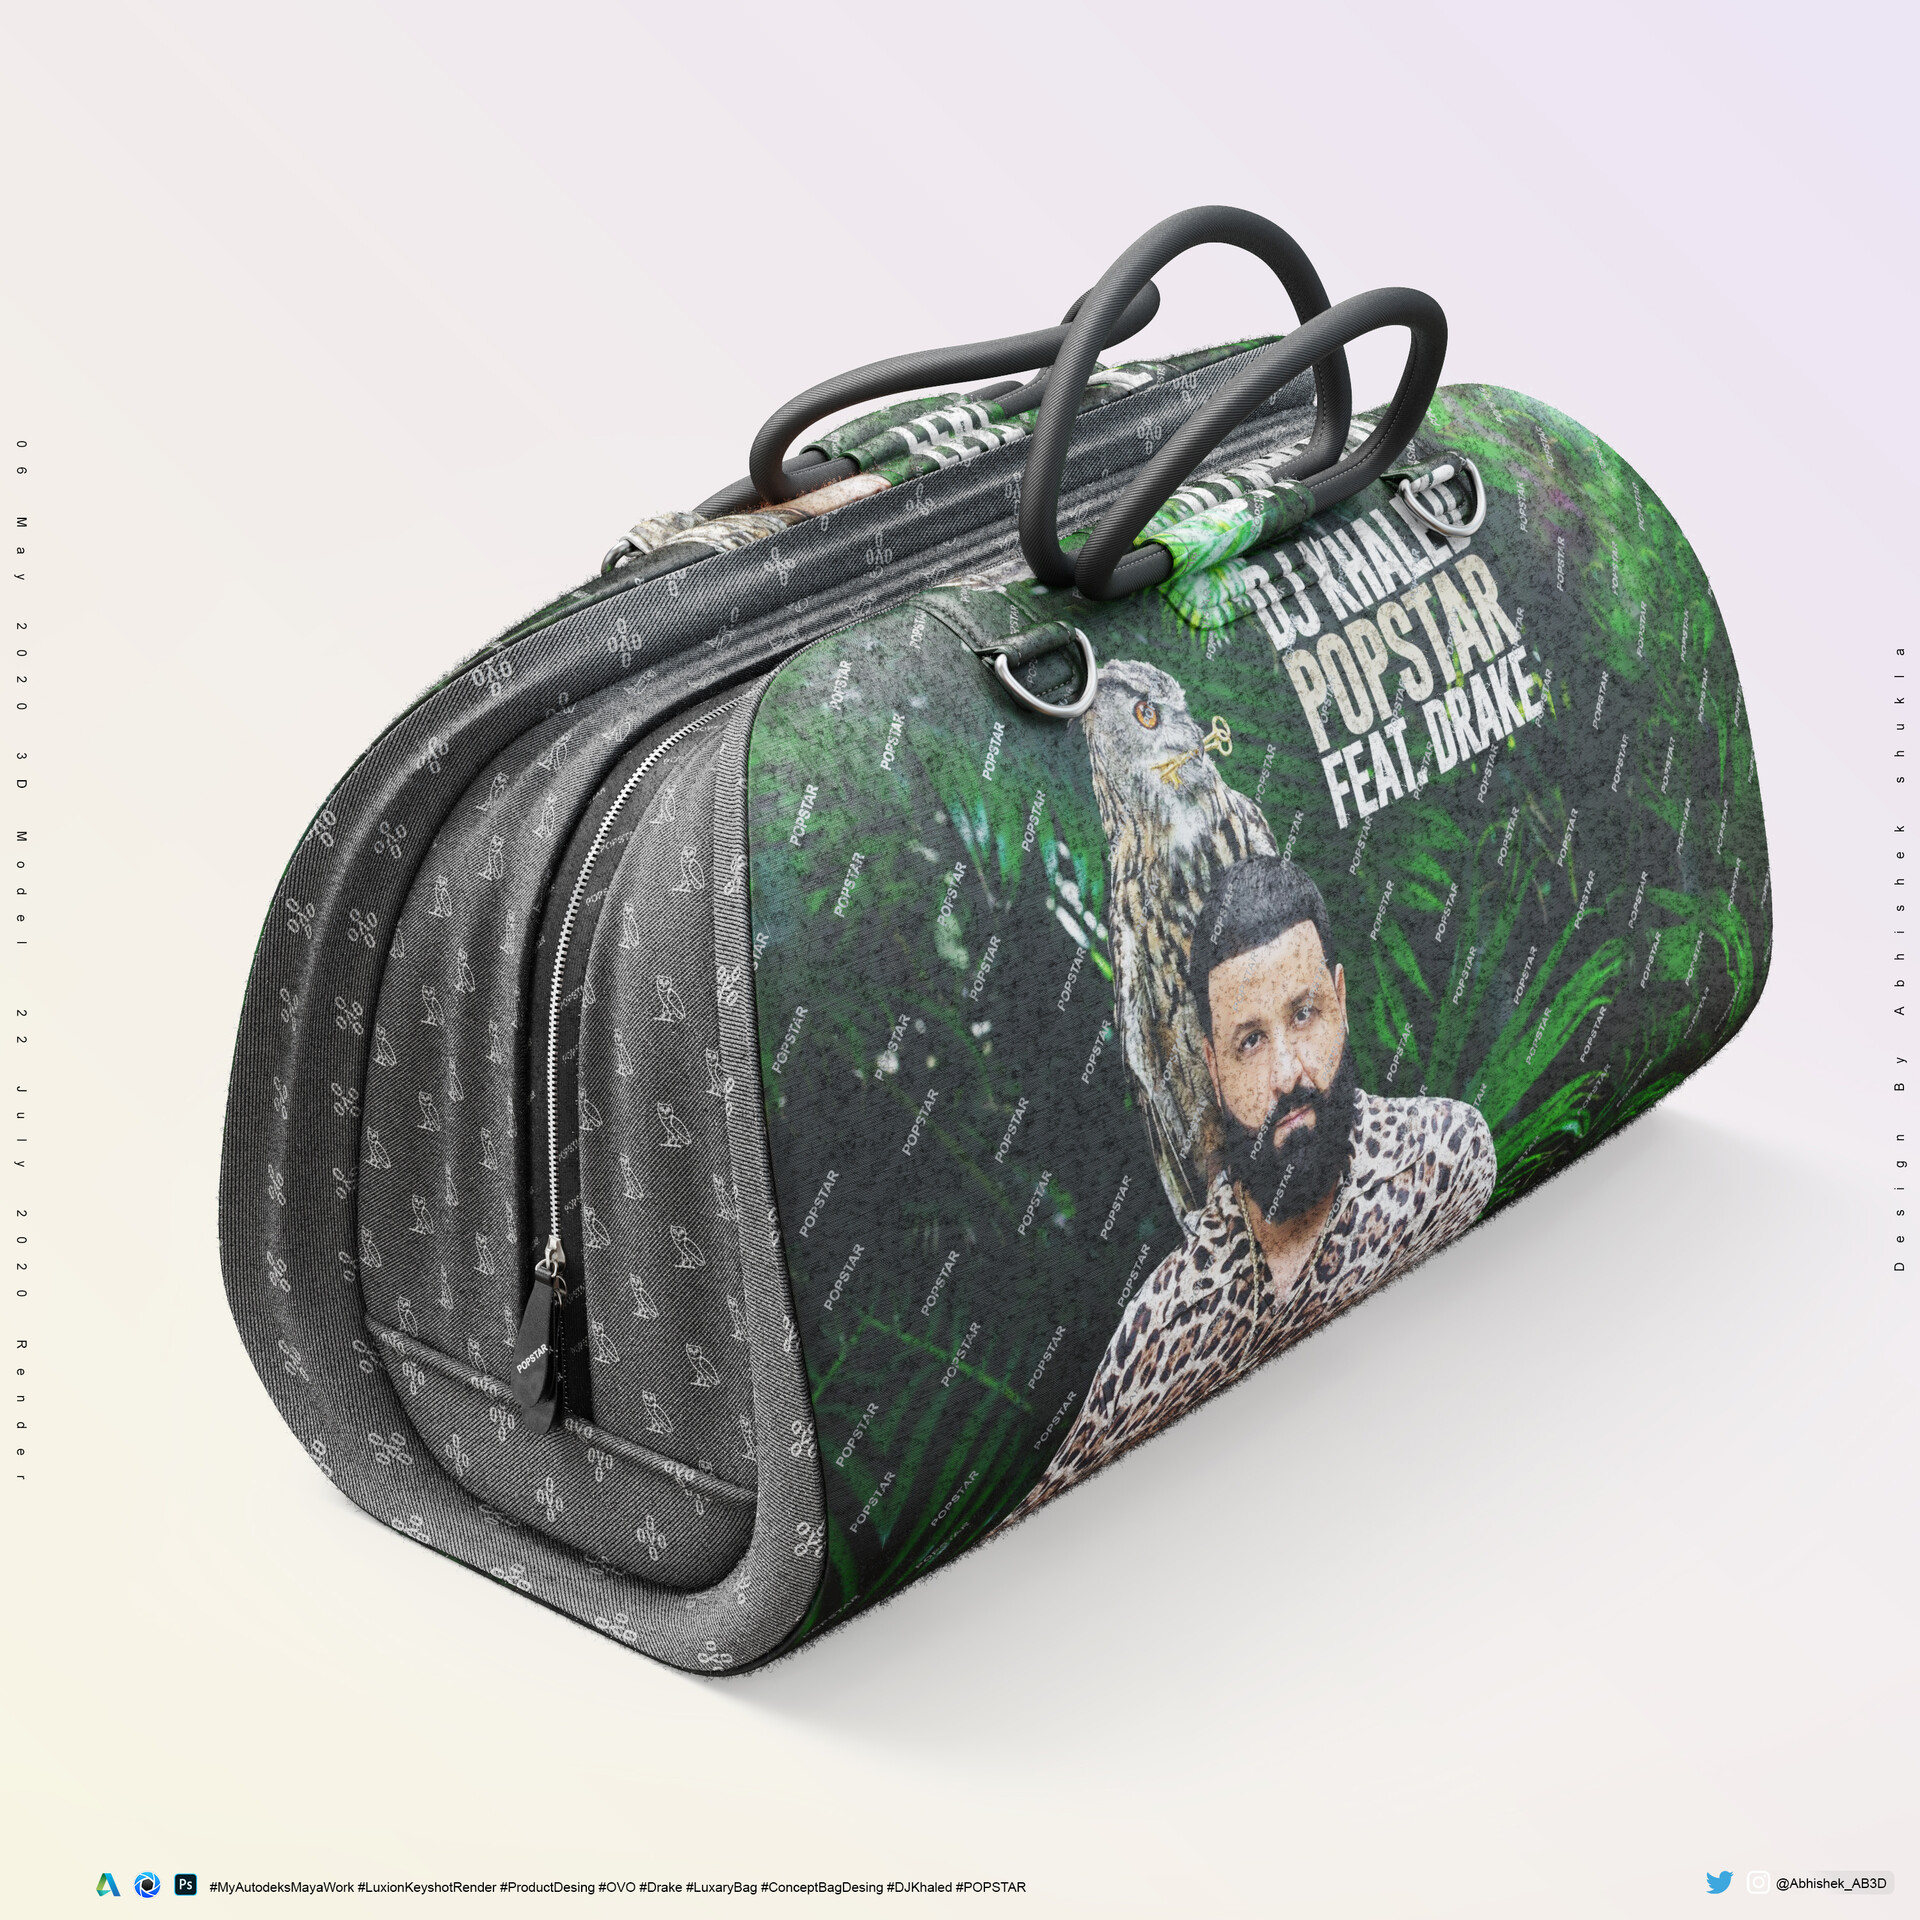 Abhishek Shukla - DJ Khaled featuring Drake POPSTAR Cover bag design